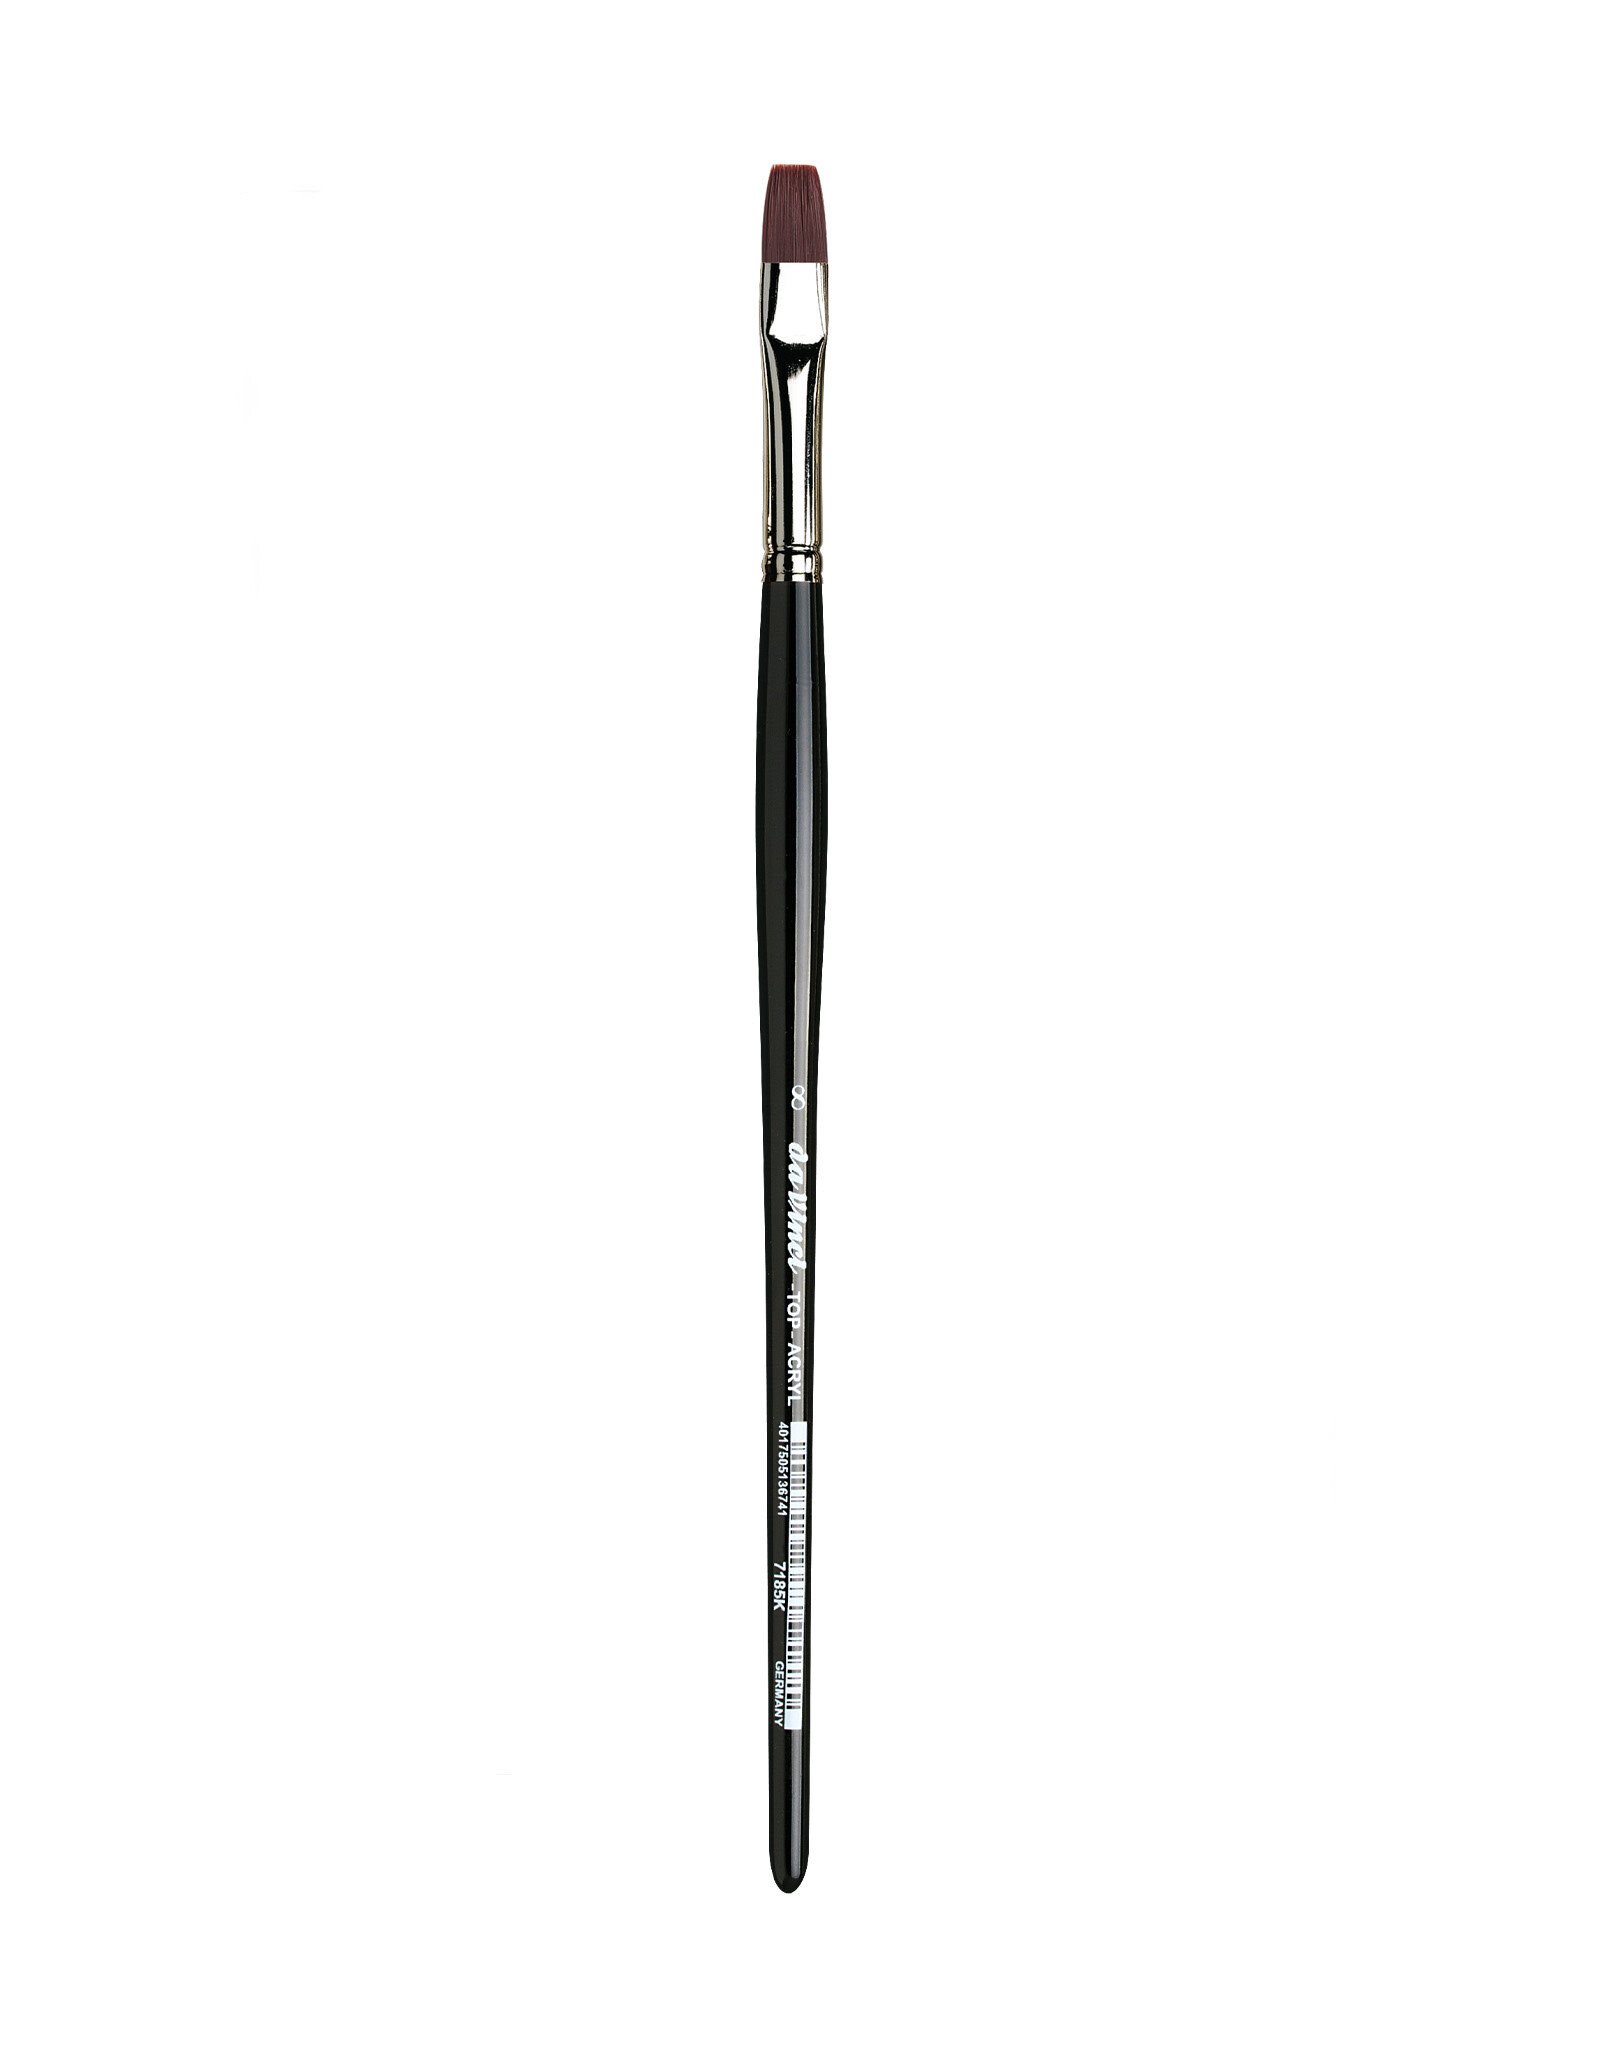 Da Vinci Brush Da Vinci Top-Acryl Bright # 8 Short handle.